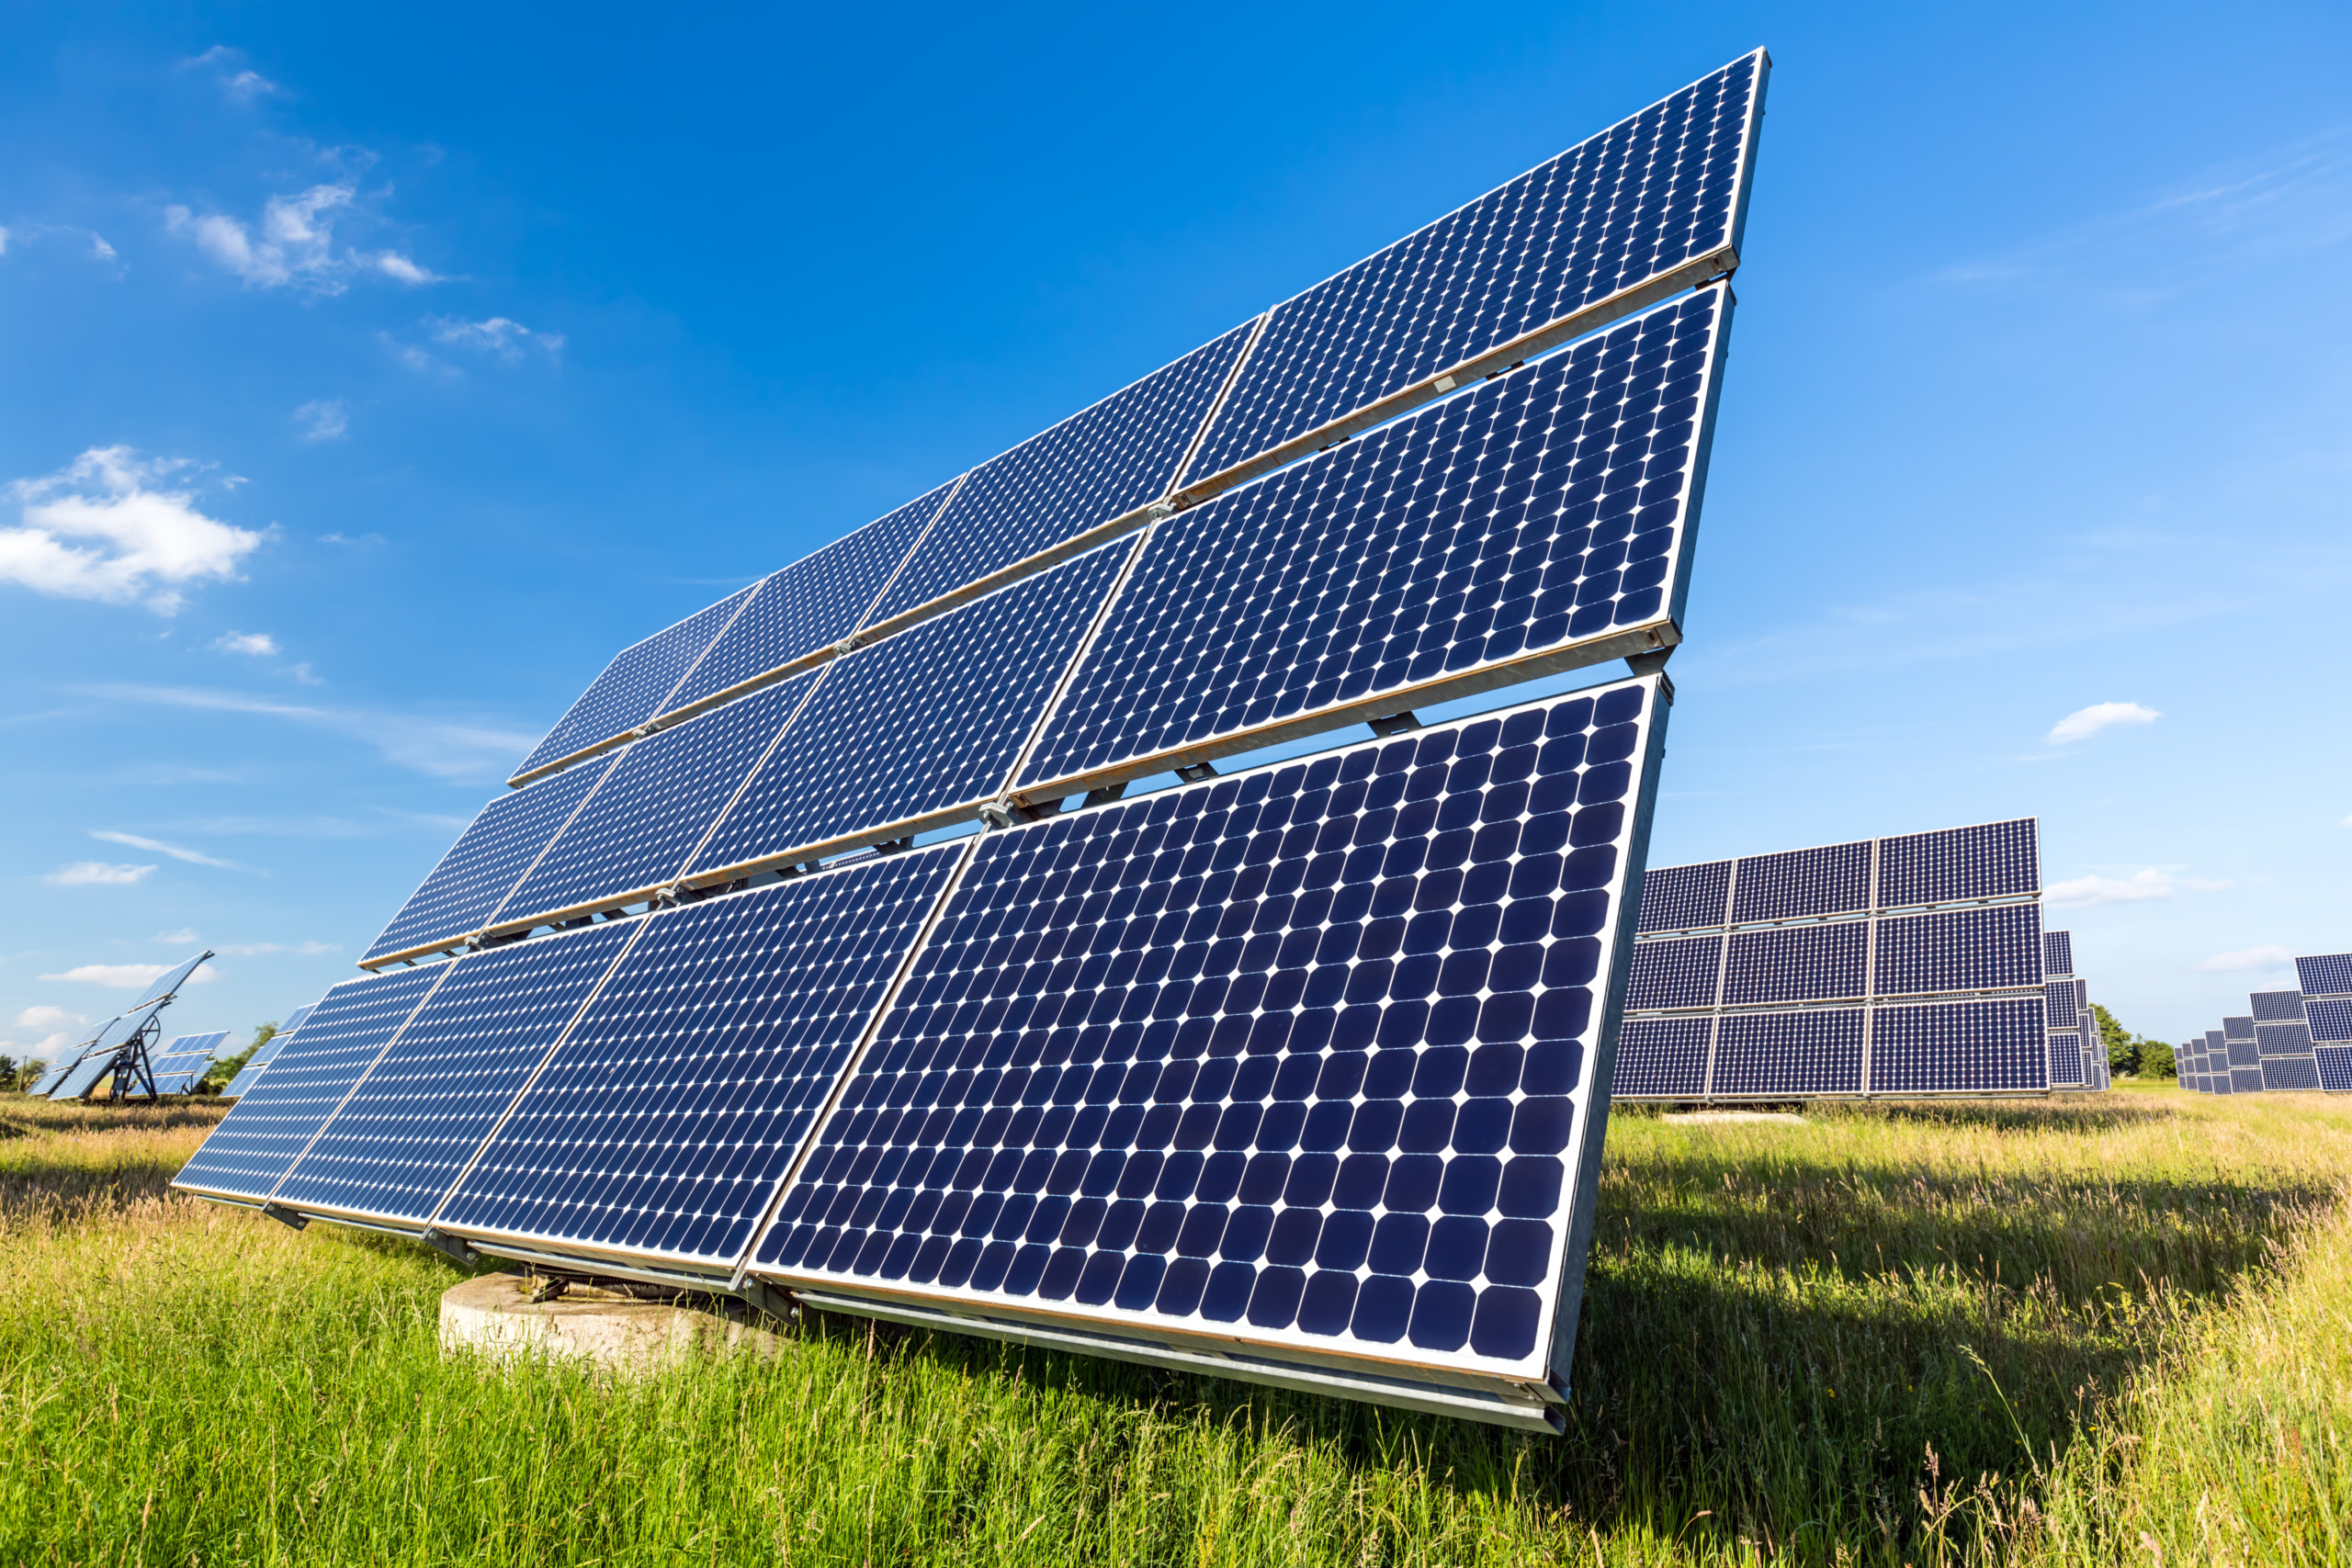 evergy-to-build-10-mw-solar-array-at-power-plant-in-kansas-city